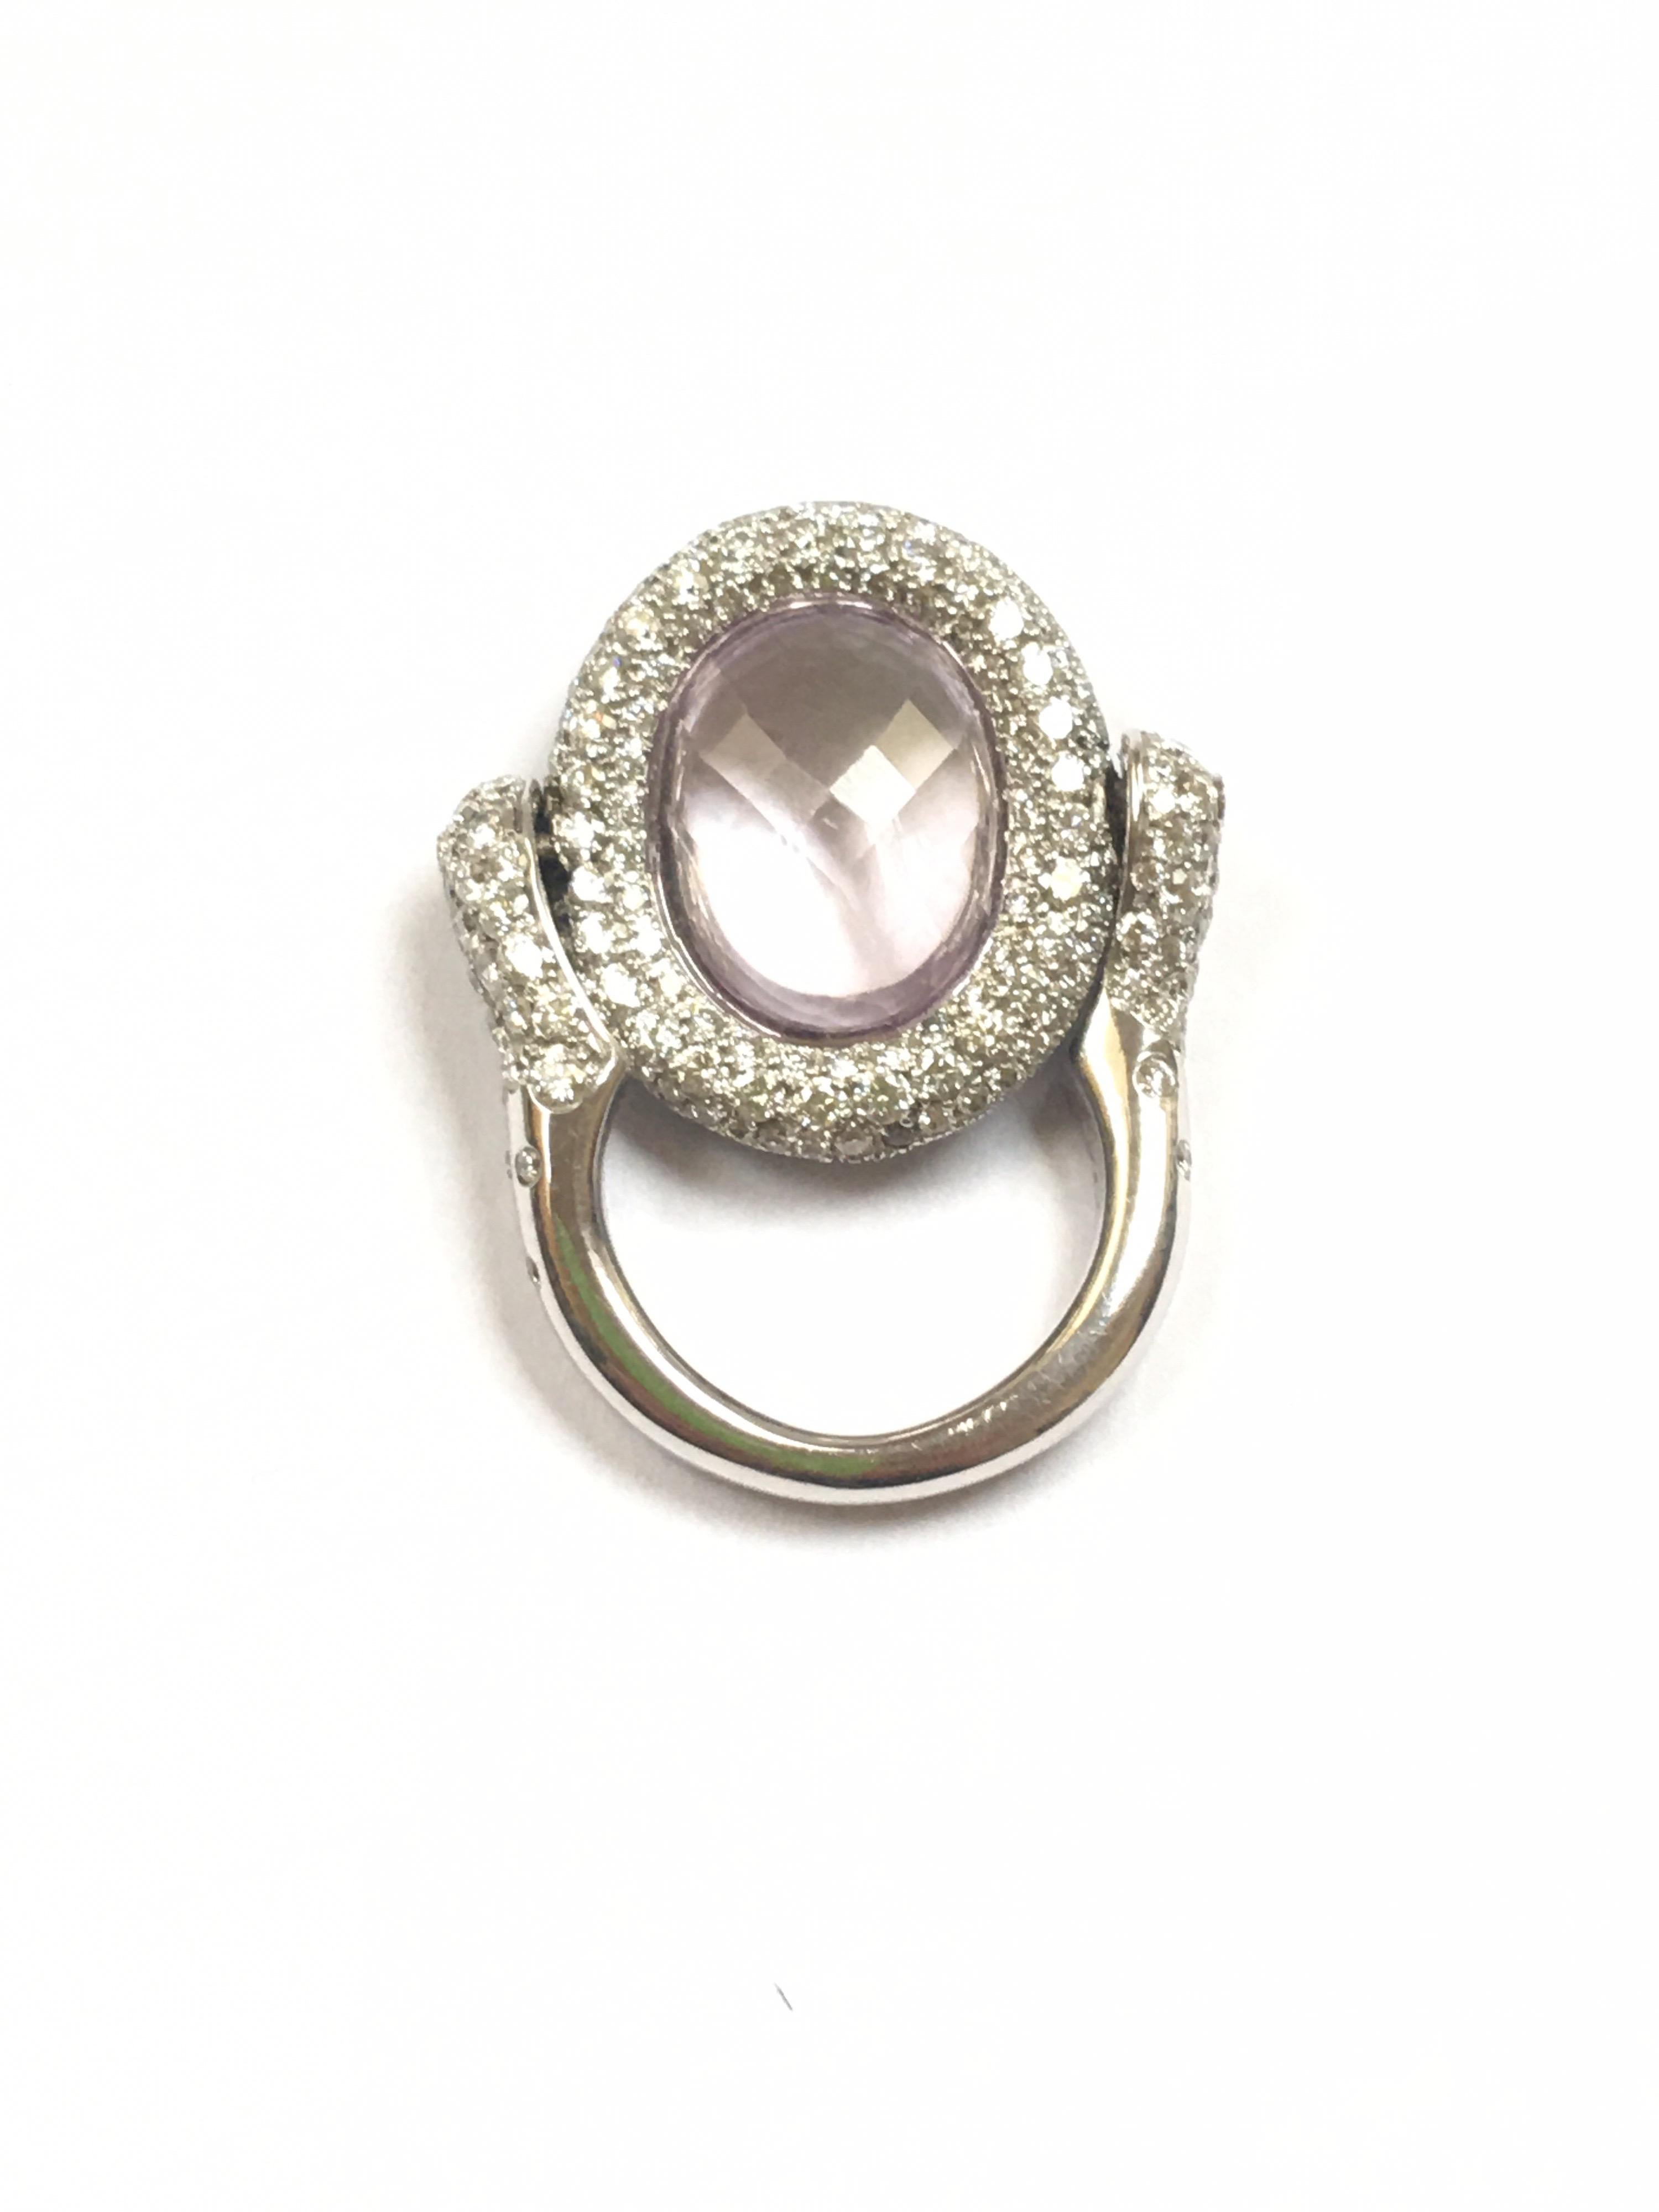 Diamond Sapphire Kunzite Rotating Ring de Grisogono 18 Karat White Gold 7